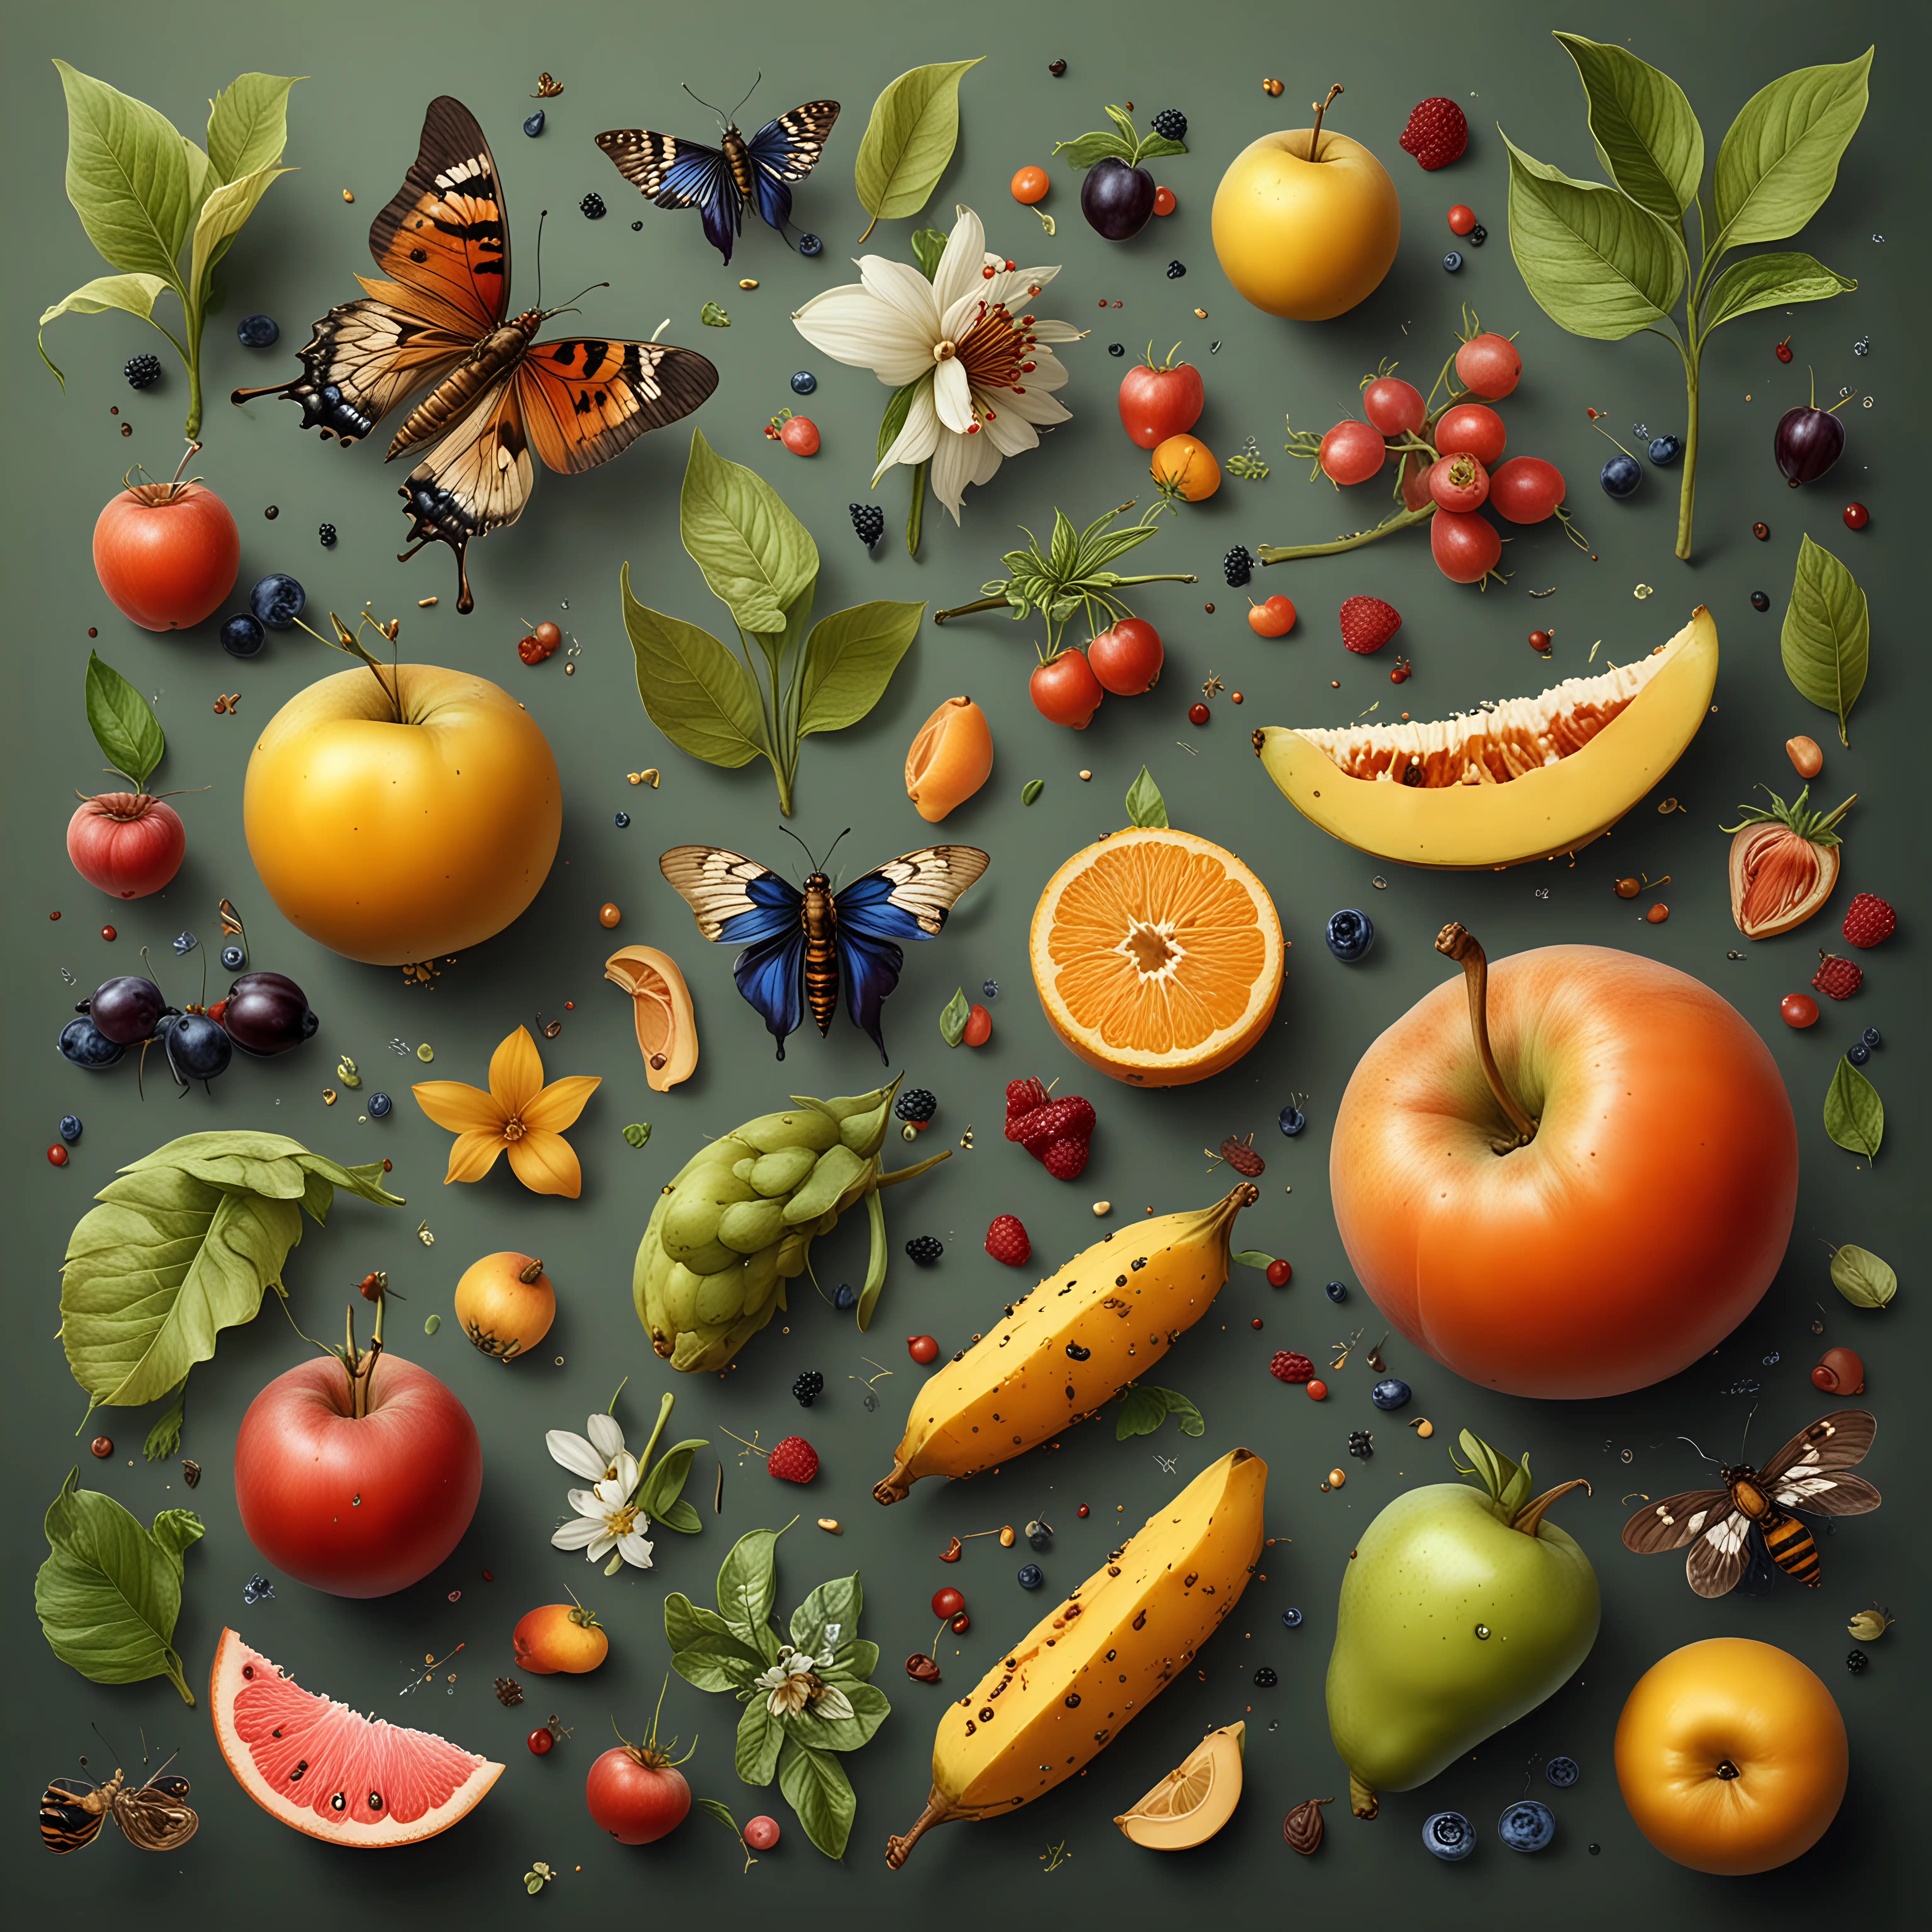 Colorful Flower and Fruit Illustration Inspired by Jan van Kessel II